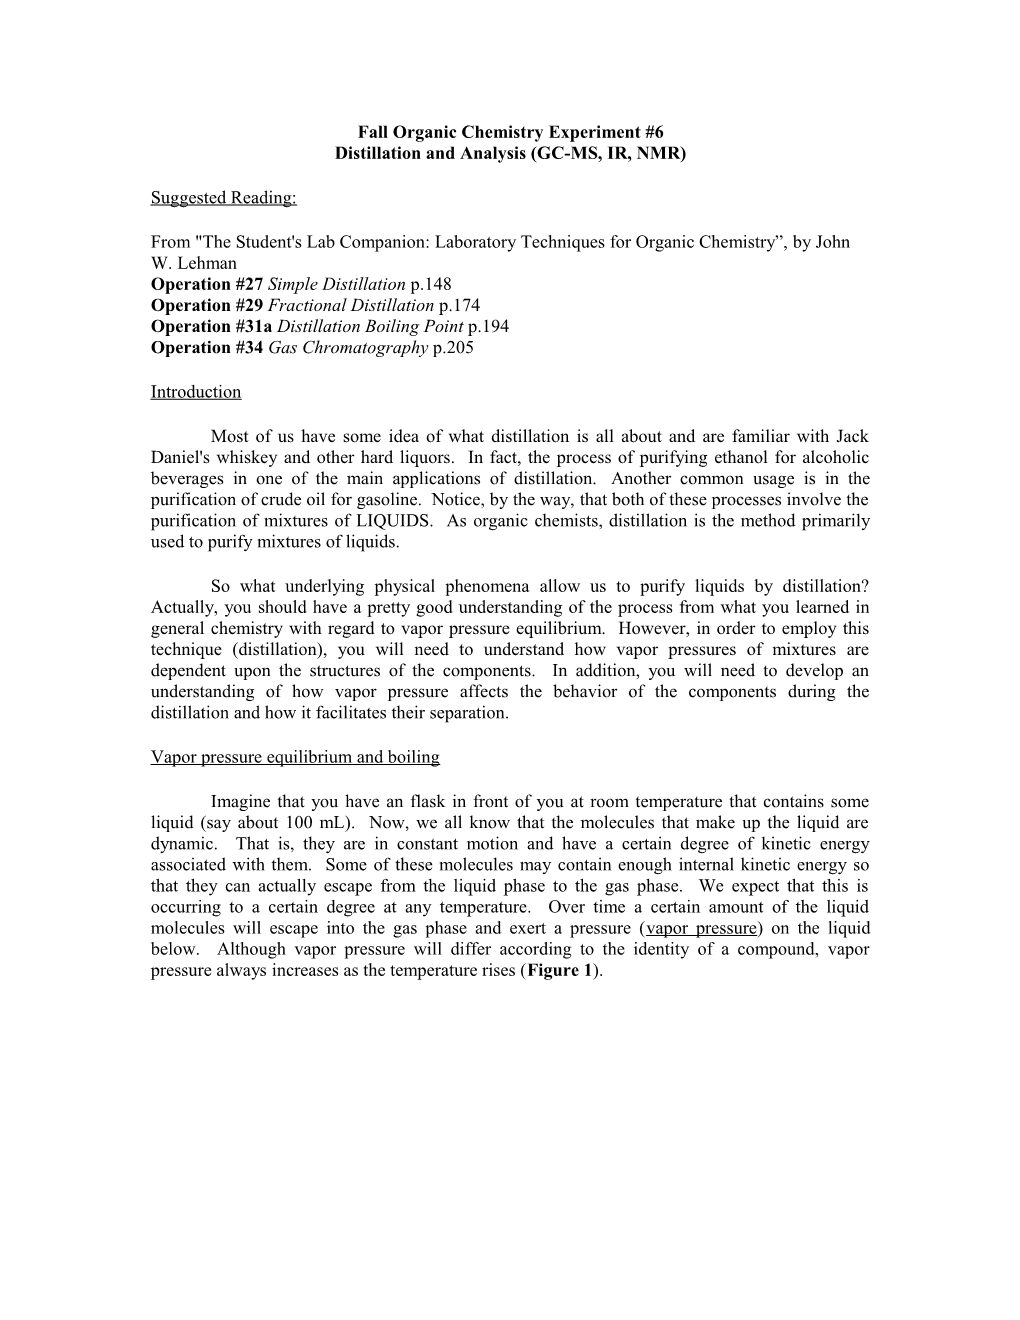 Fall Organic Chemistry Experiment #6 Distillation and Analysis (GC-MS, IR, NMR)